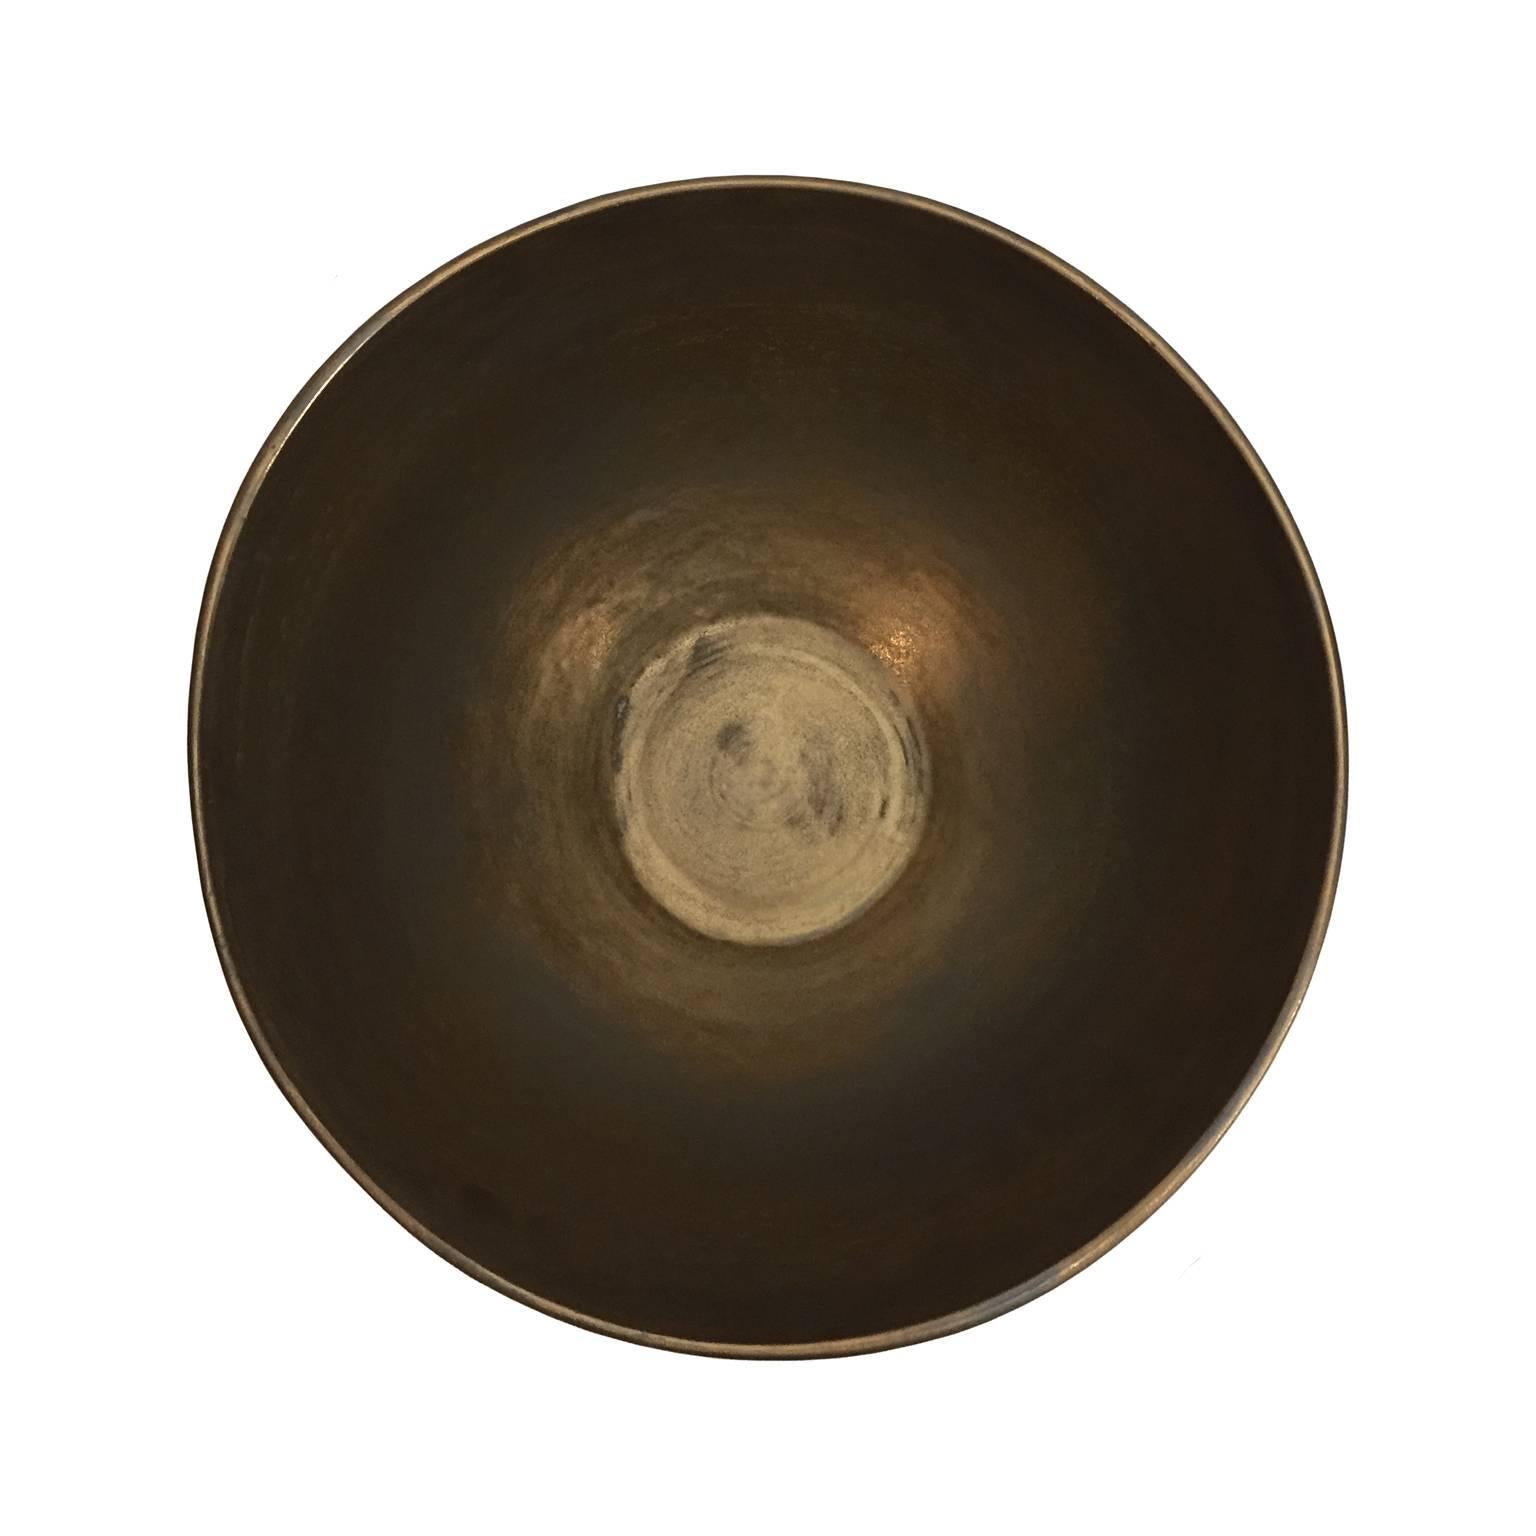 Large matte black glaze curved ceramic bowl with gold glaze lip and interior by Sandi Fellman, 2018.